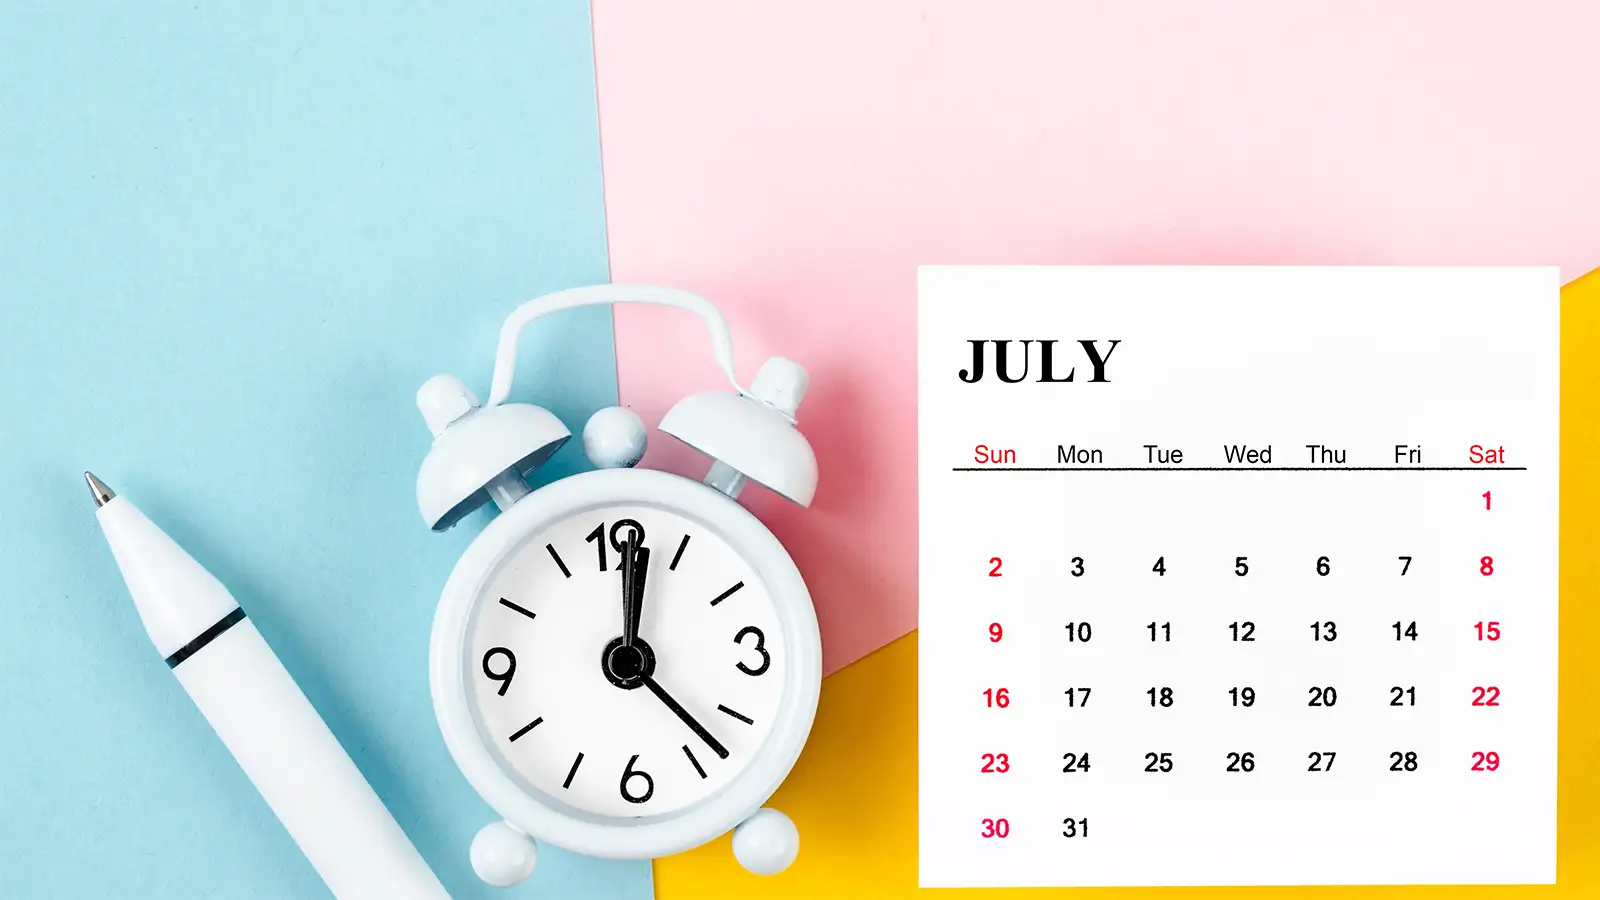 July Trivia Quiz July calendar